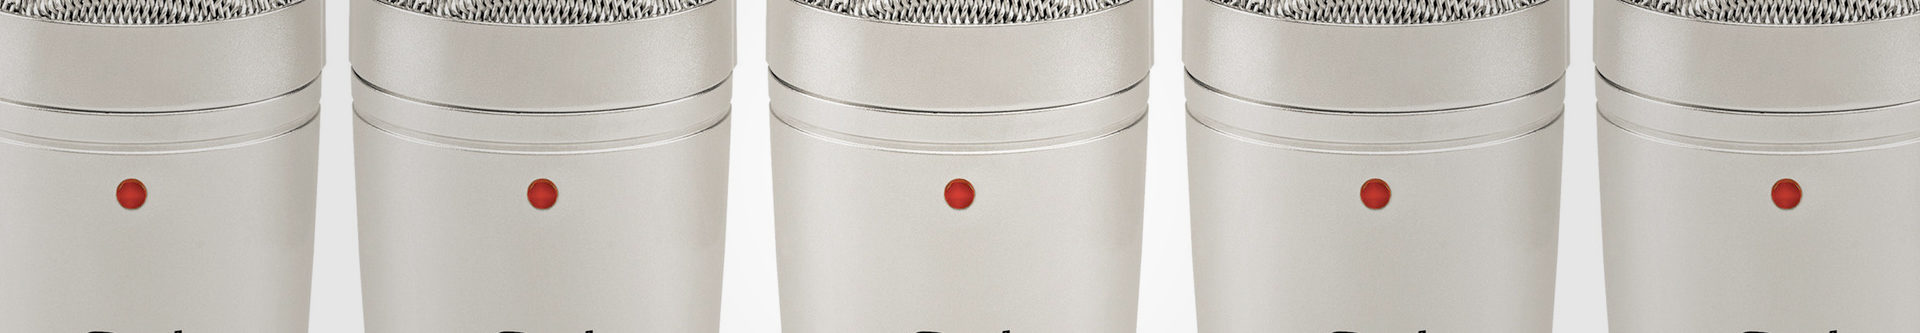 behringer c1 condenser microphone